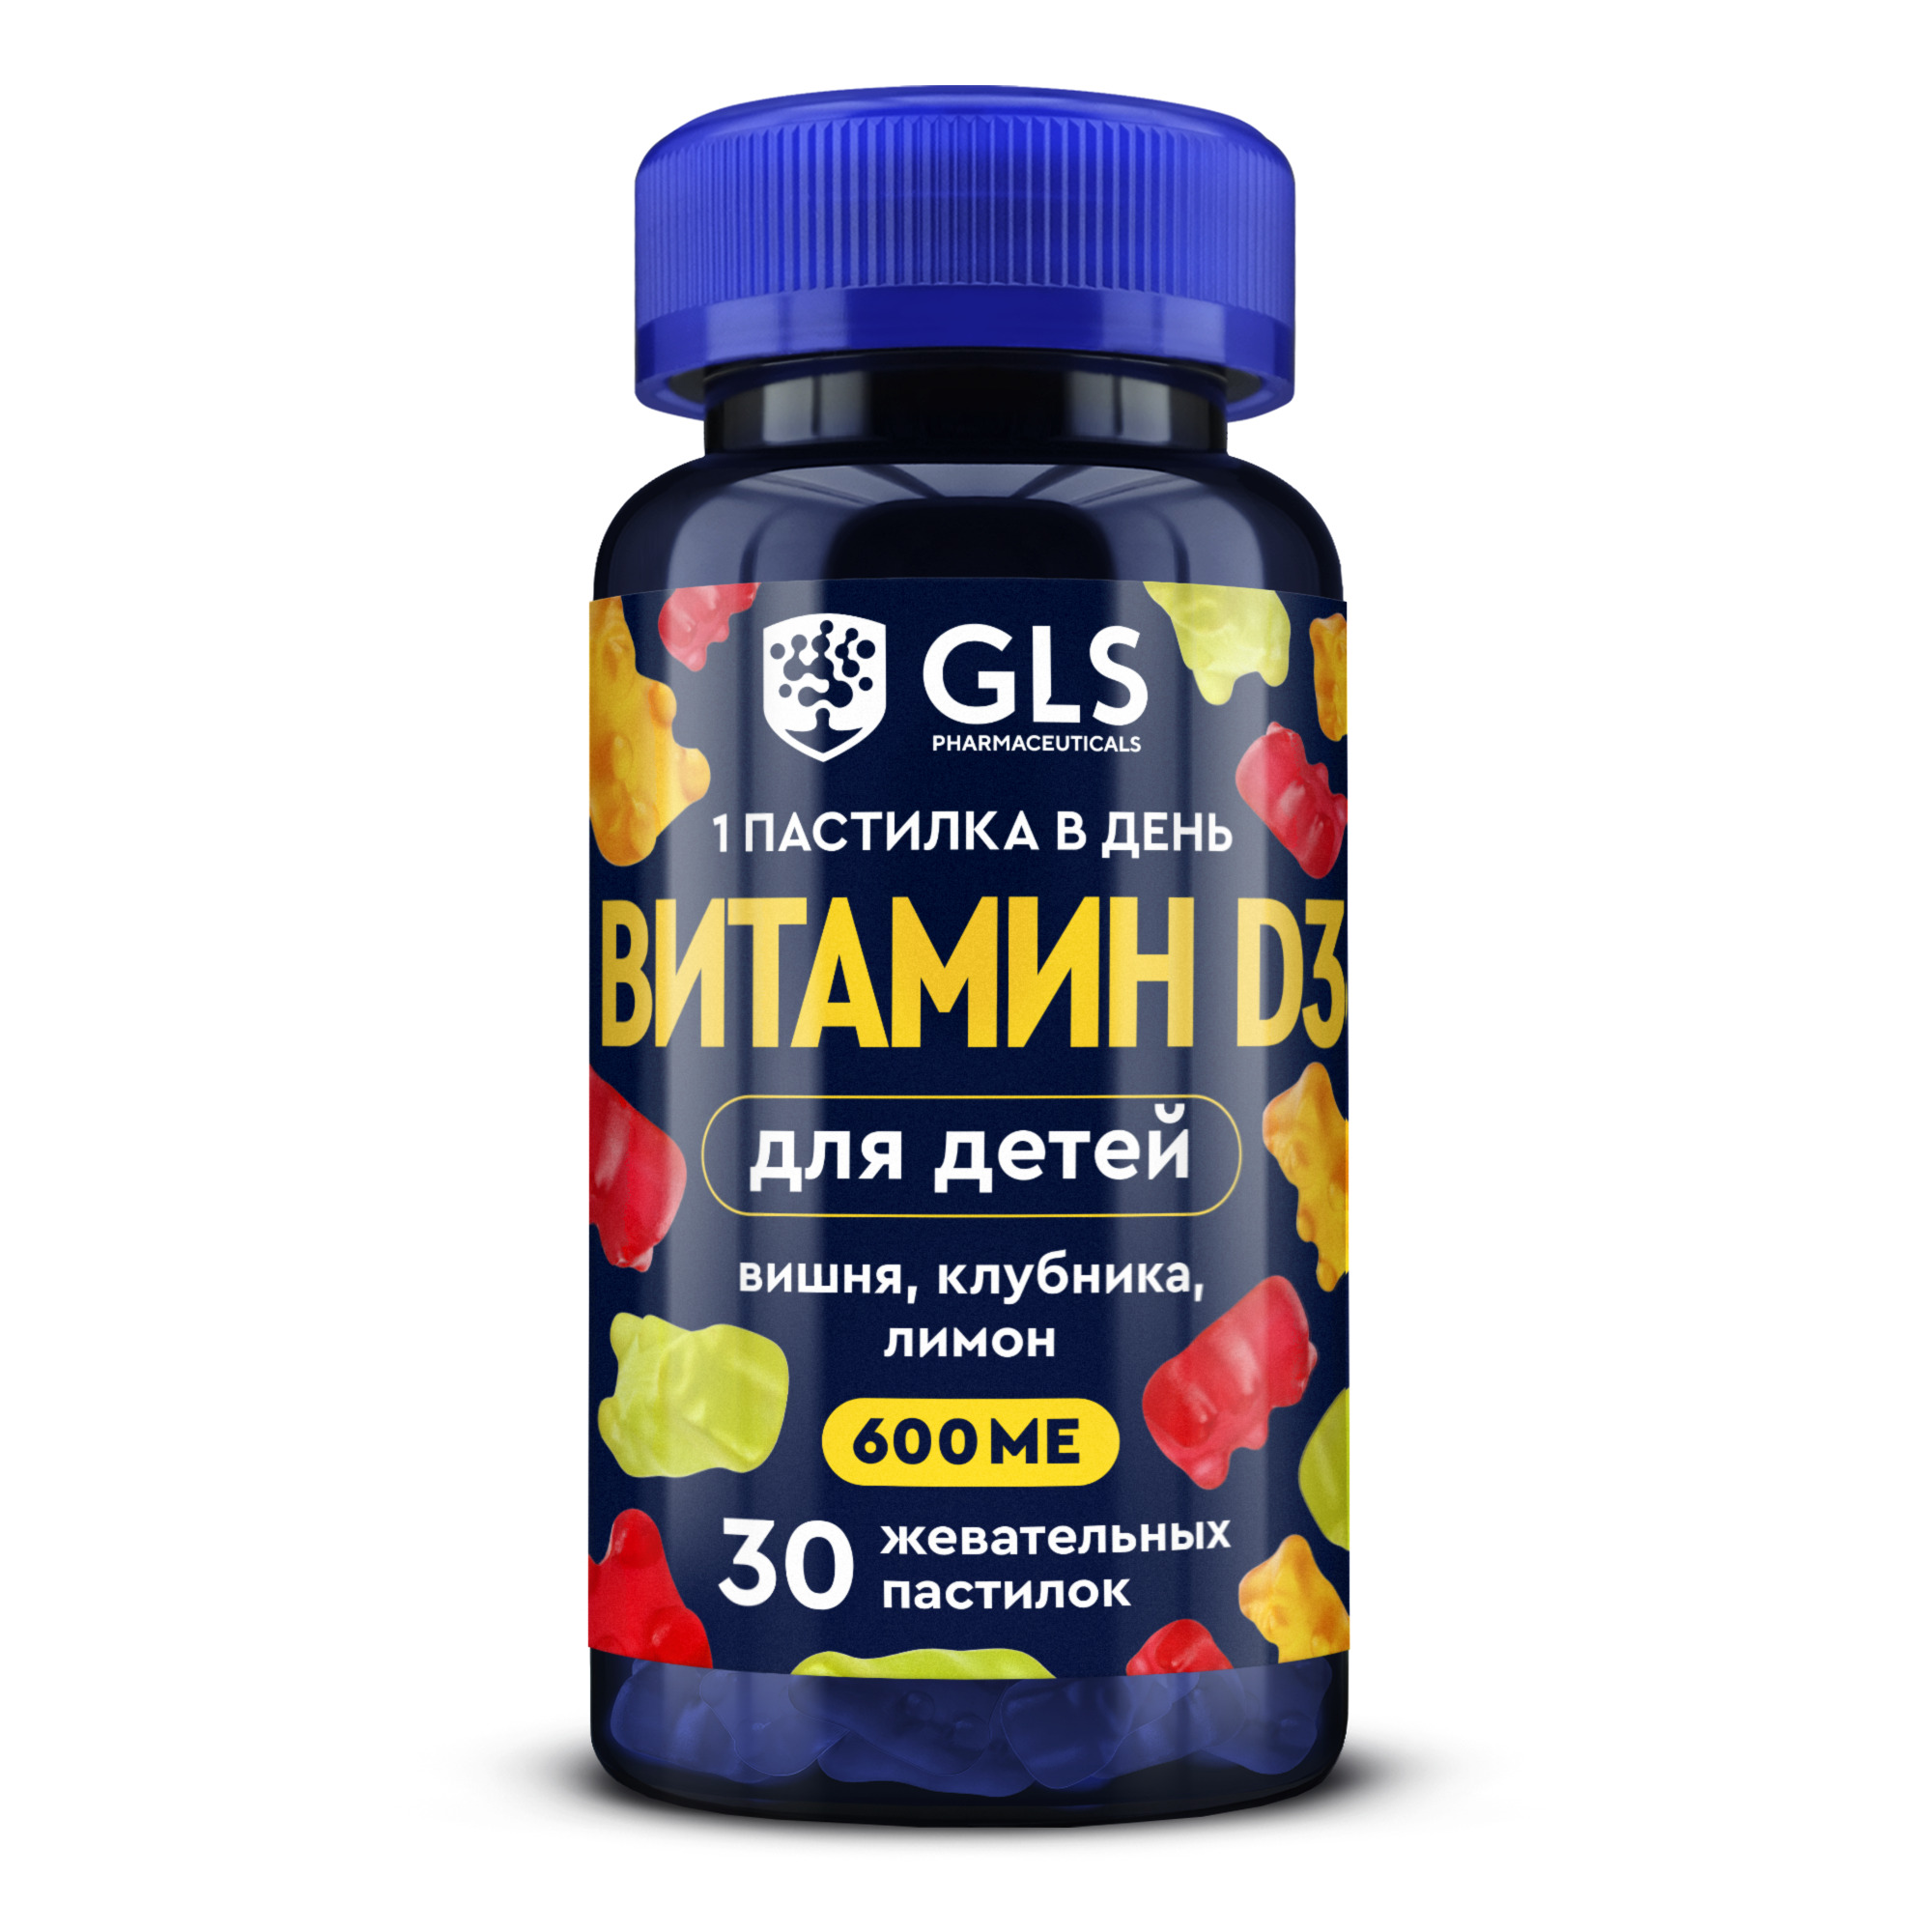 Gls витамин д3. Витамины GLS Pharmaceuticals.